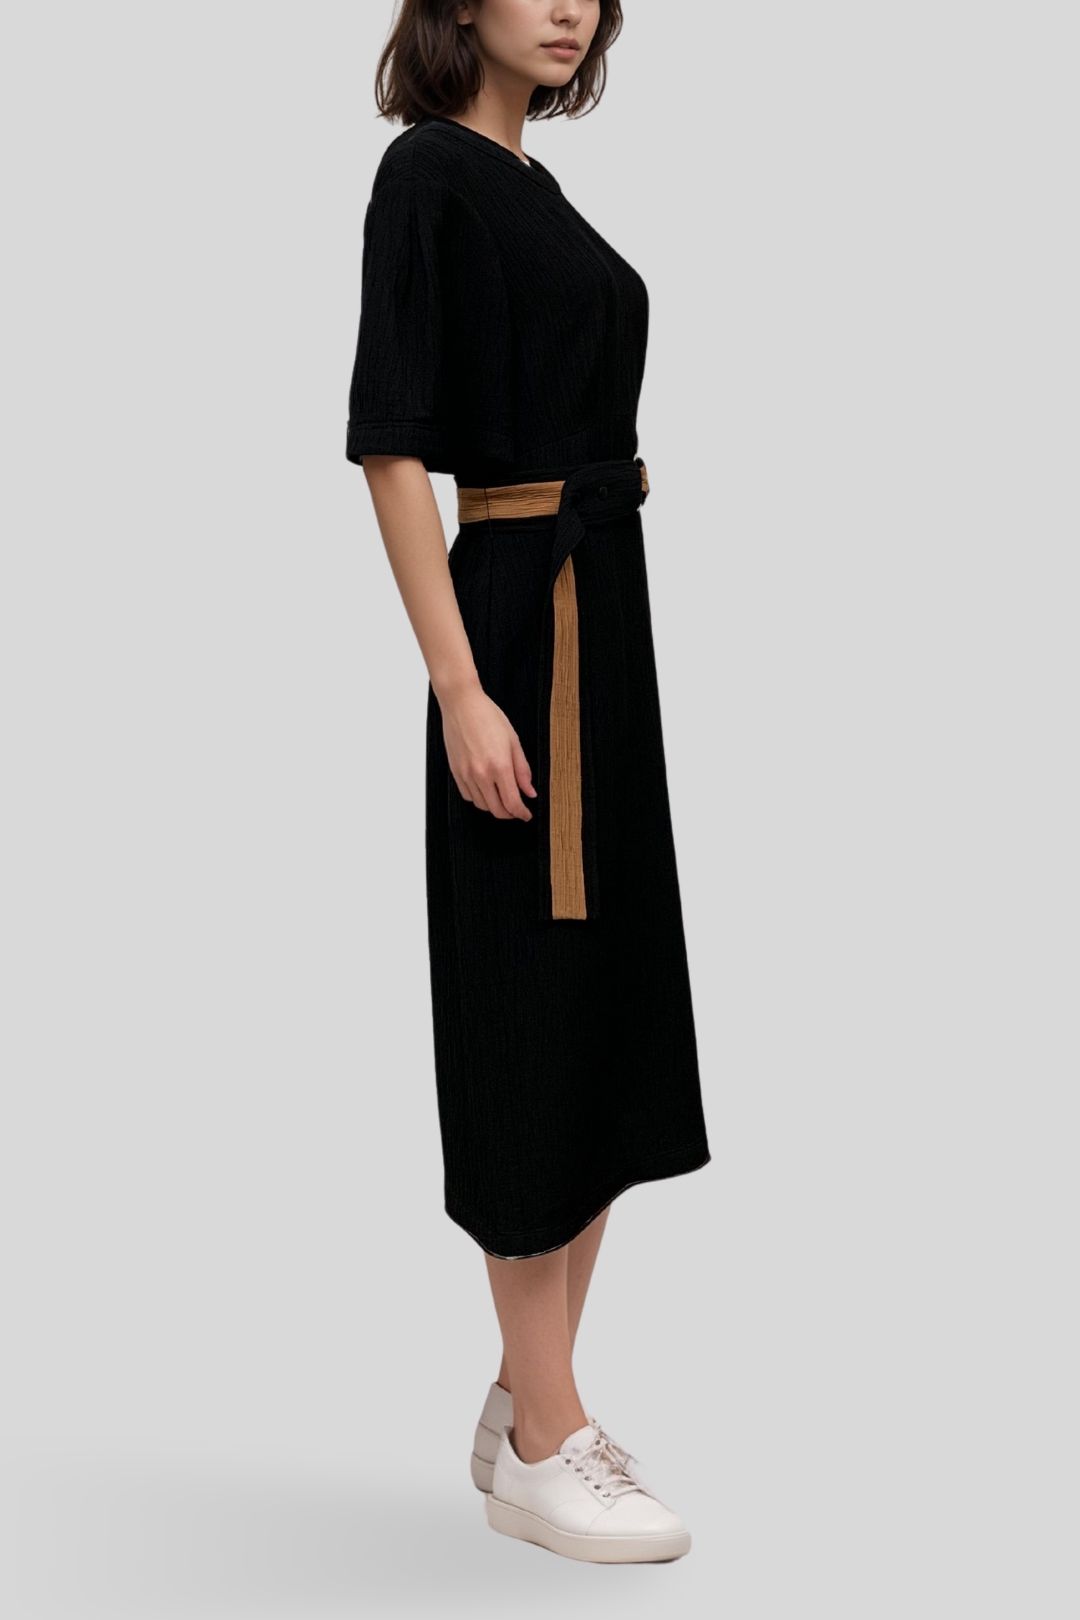 Veronika Maine Belted Black Dress